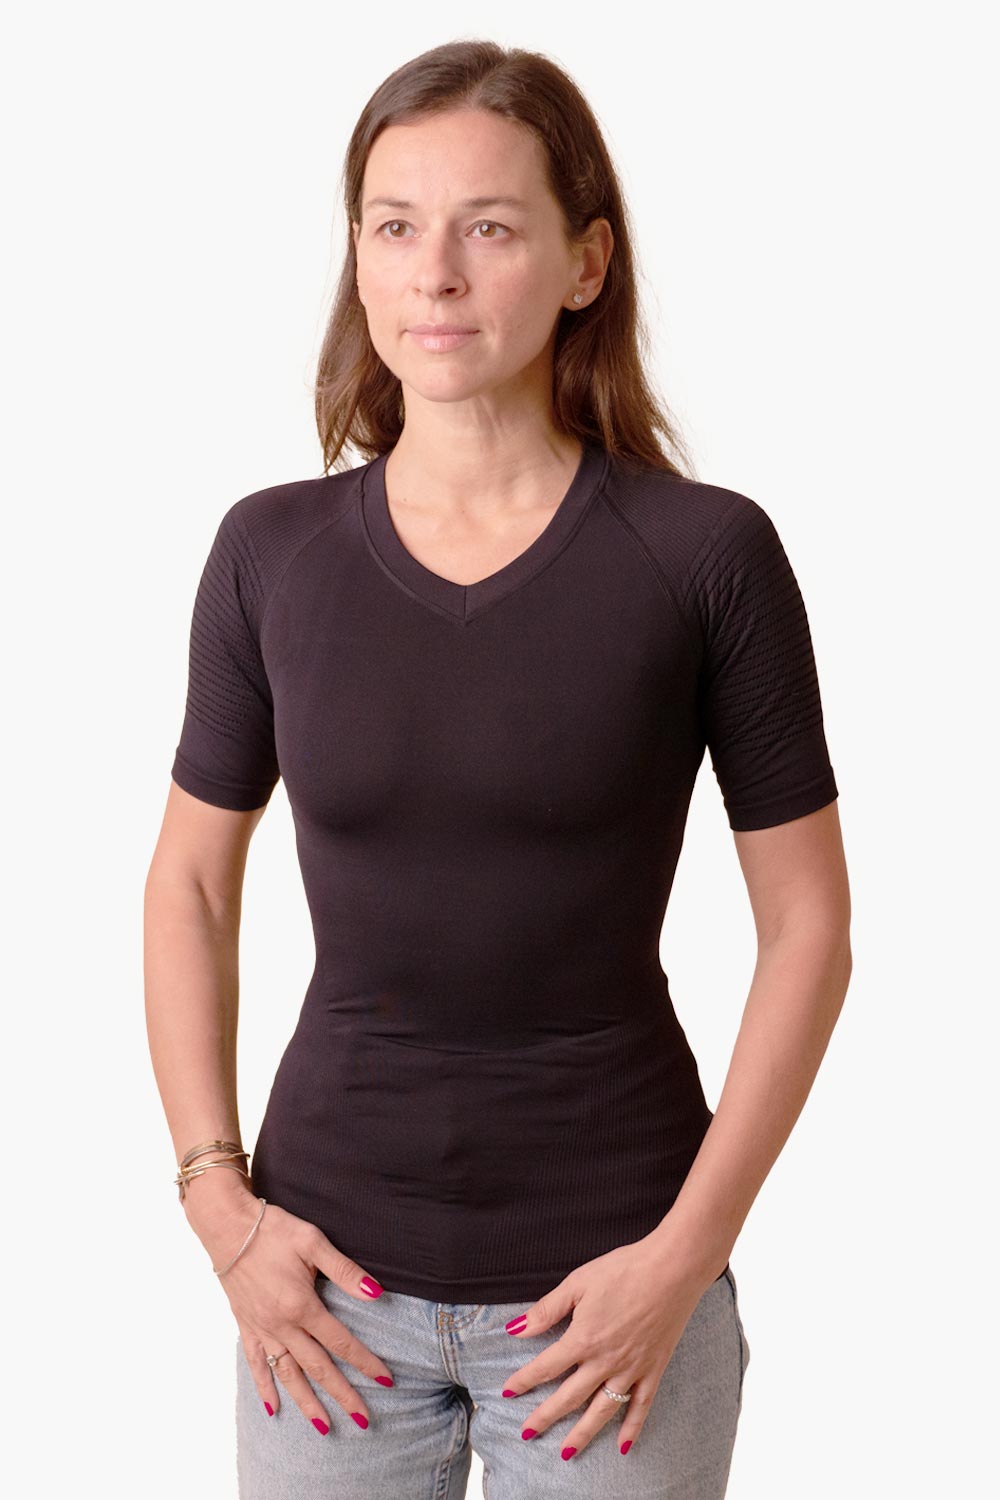 Anodyne® Körperhaltung Shirt - Frauen